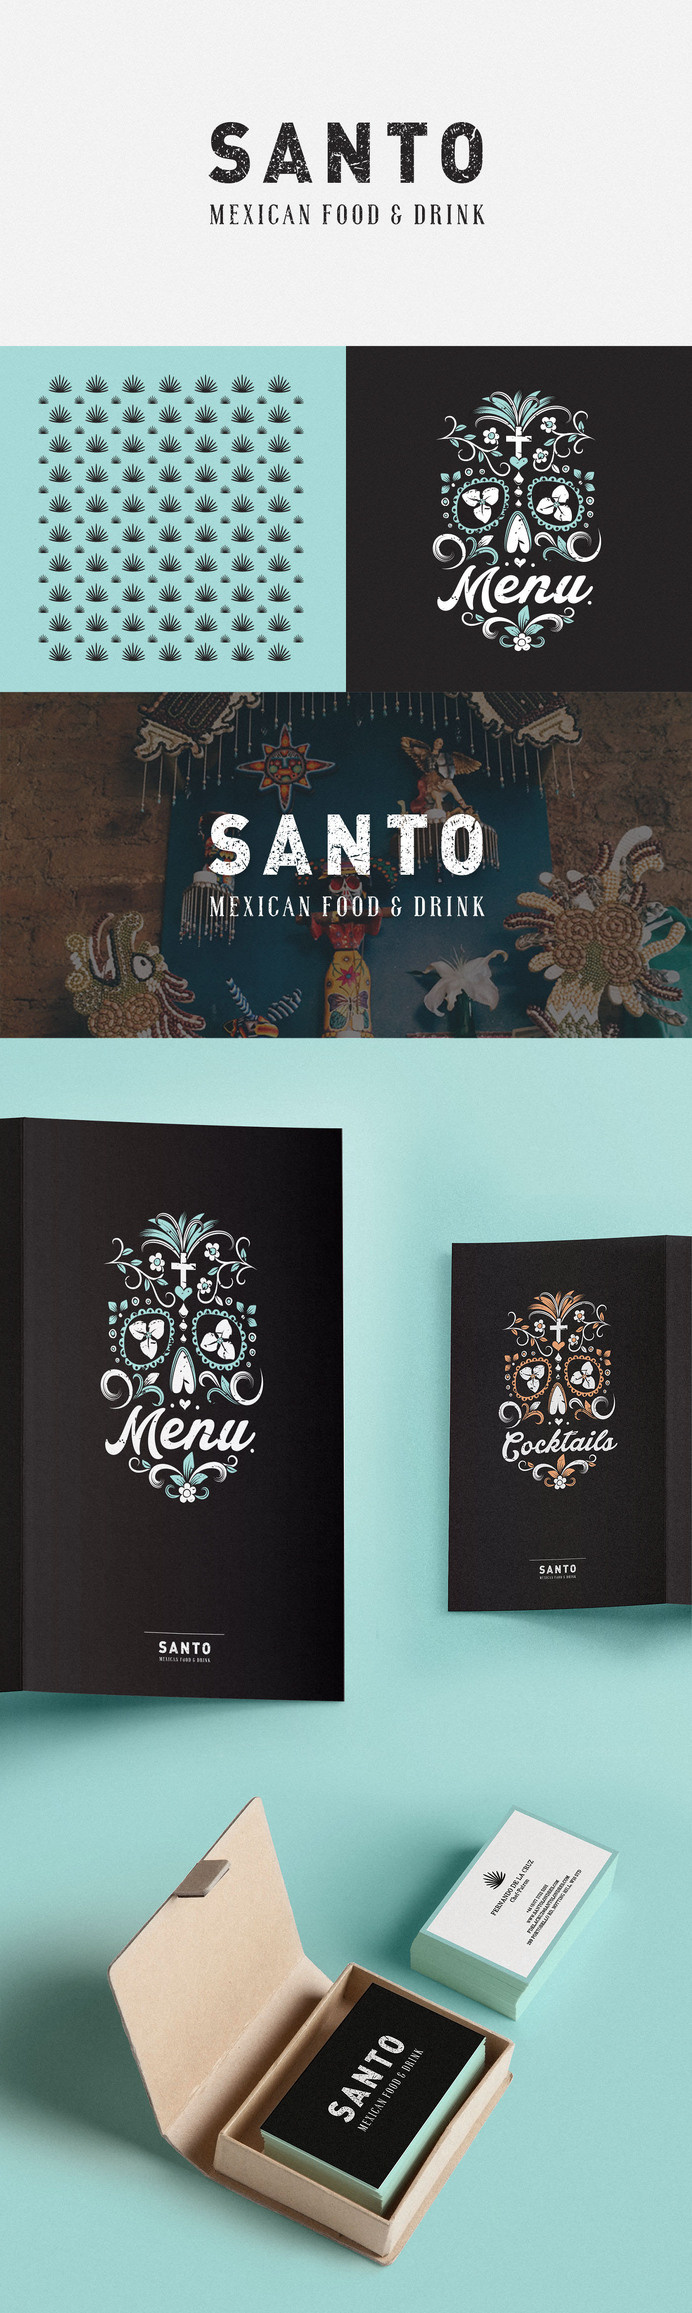 Business card design idea #77: Branding for Santo #pattern #branding #business #london #menu #restaurant #mexican #skulls #cards